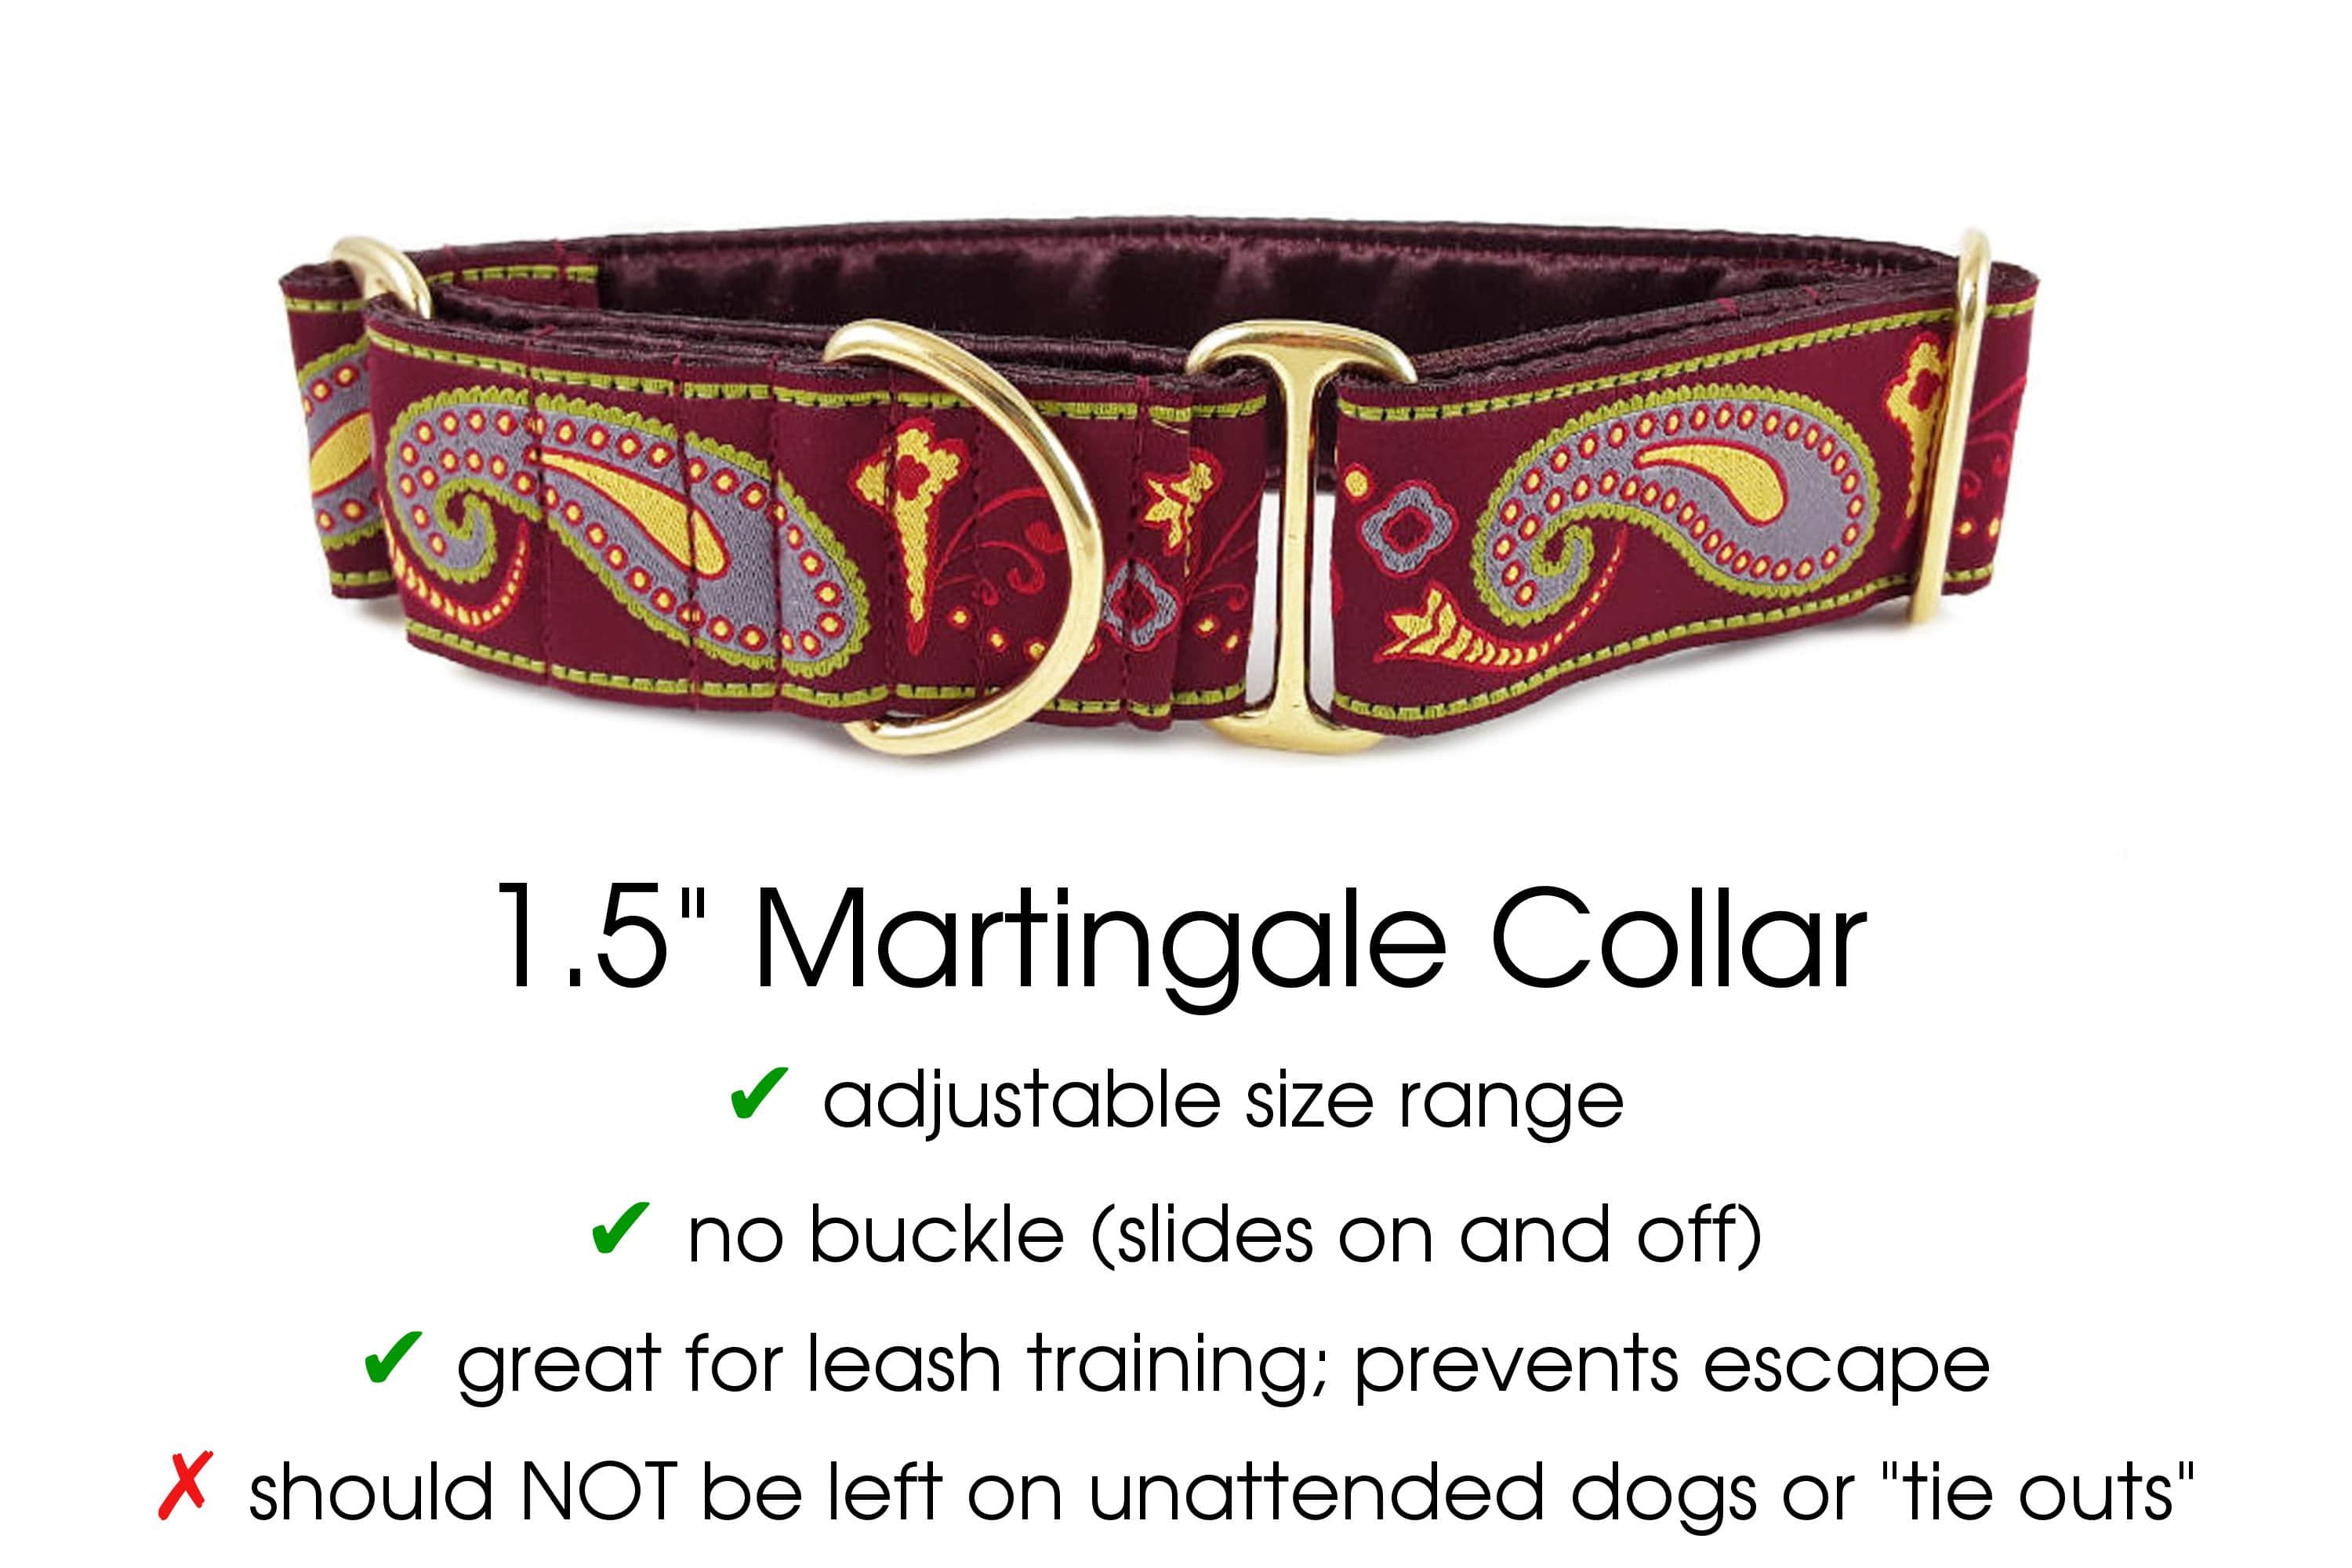 Parisian Paisley Jacquard in Burgundy - Martingale Dog Collar or Buckle Dog Collar - 1.5" Width - The Hound Haberdashery